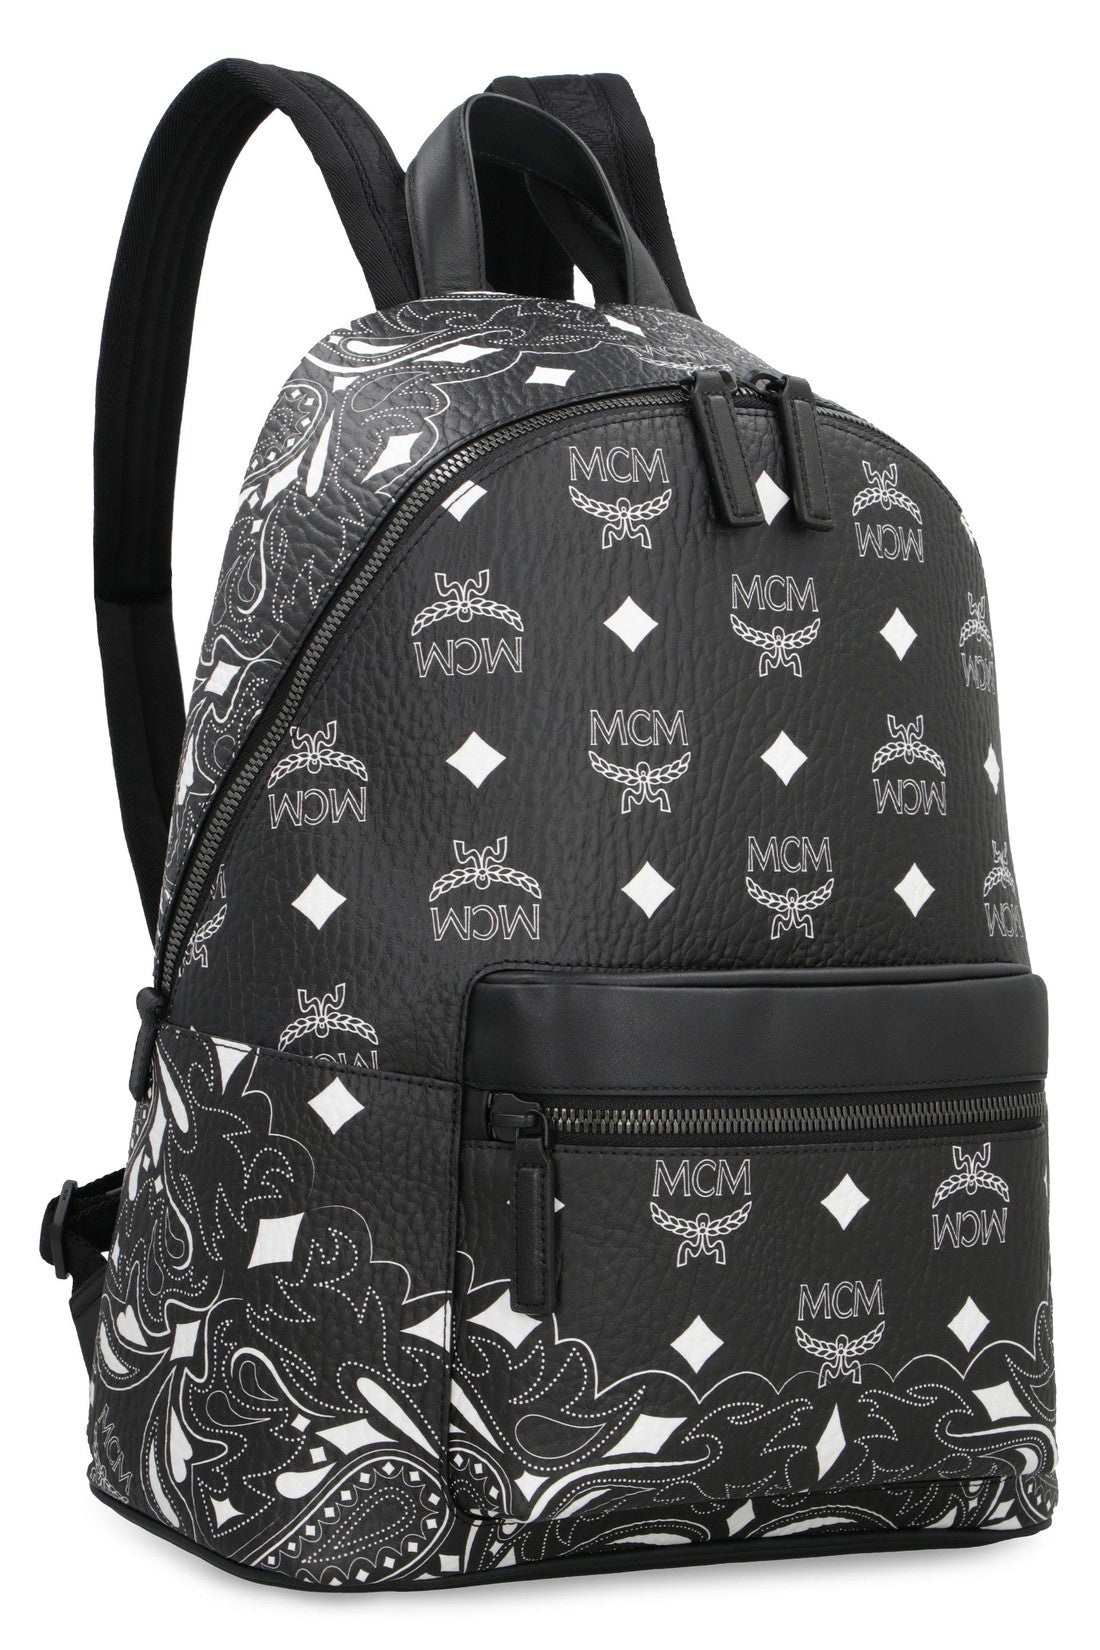 MCM-OUTLET-SALE-Stark faux leather backpack-ARCHIVIST